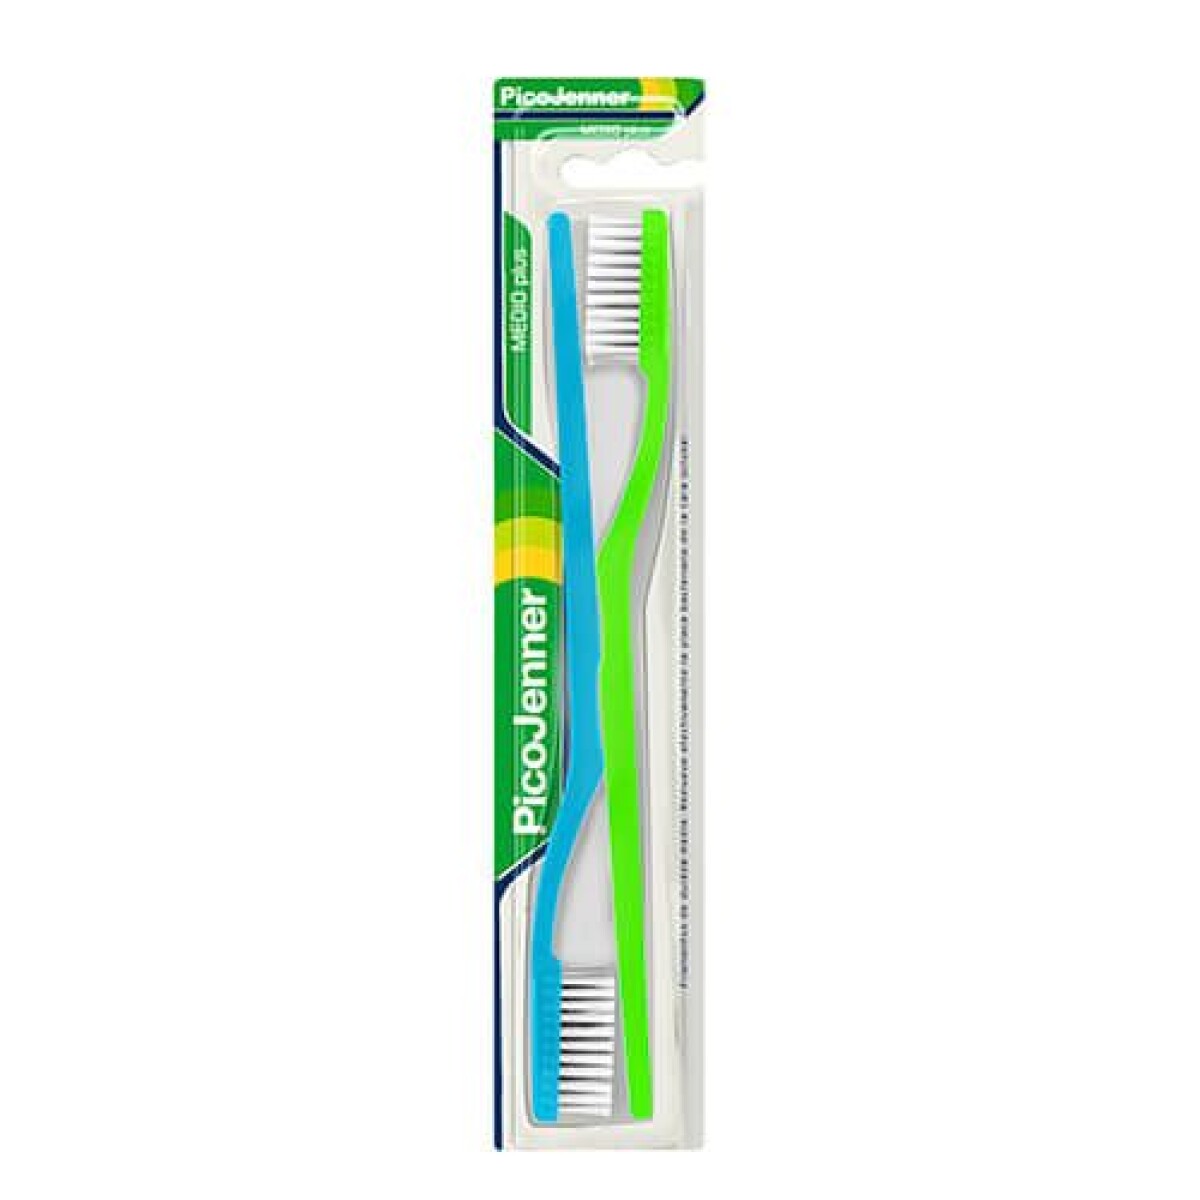 Pack x2 Cepillo dental Pico Jenner - Medio Plus 